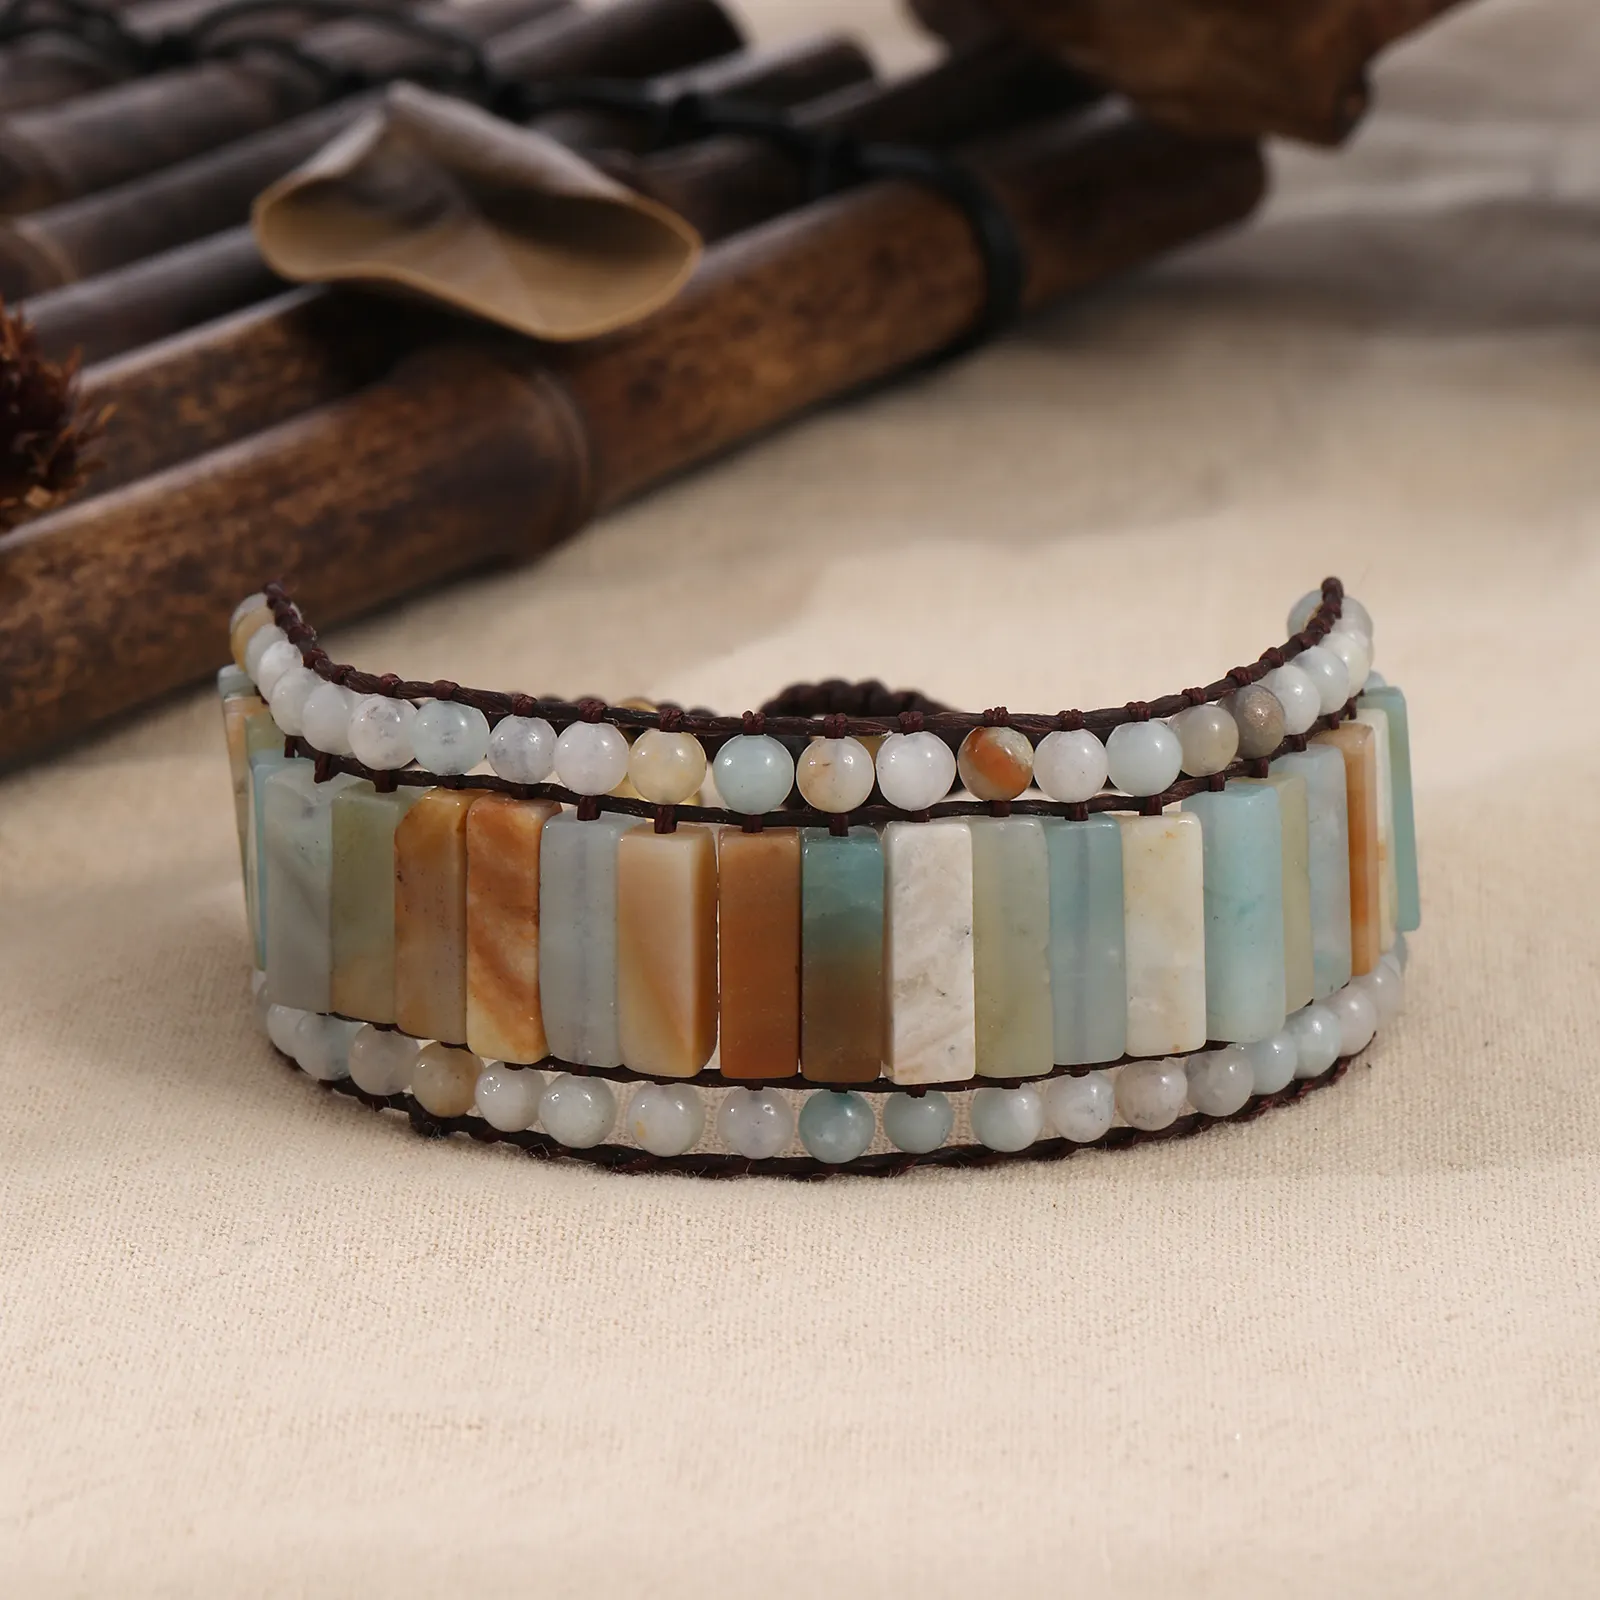 Original Design Bohemian Handmade Gemstone Jewelry Amazon Natural Stone Tube Beads Wrap Wide Bracelet Women Gift